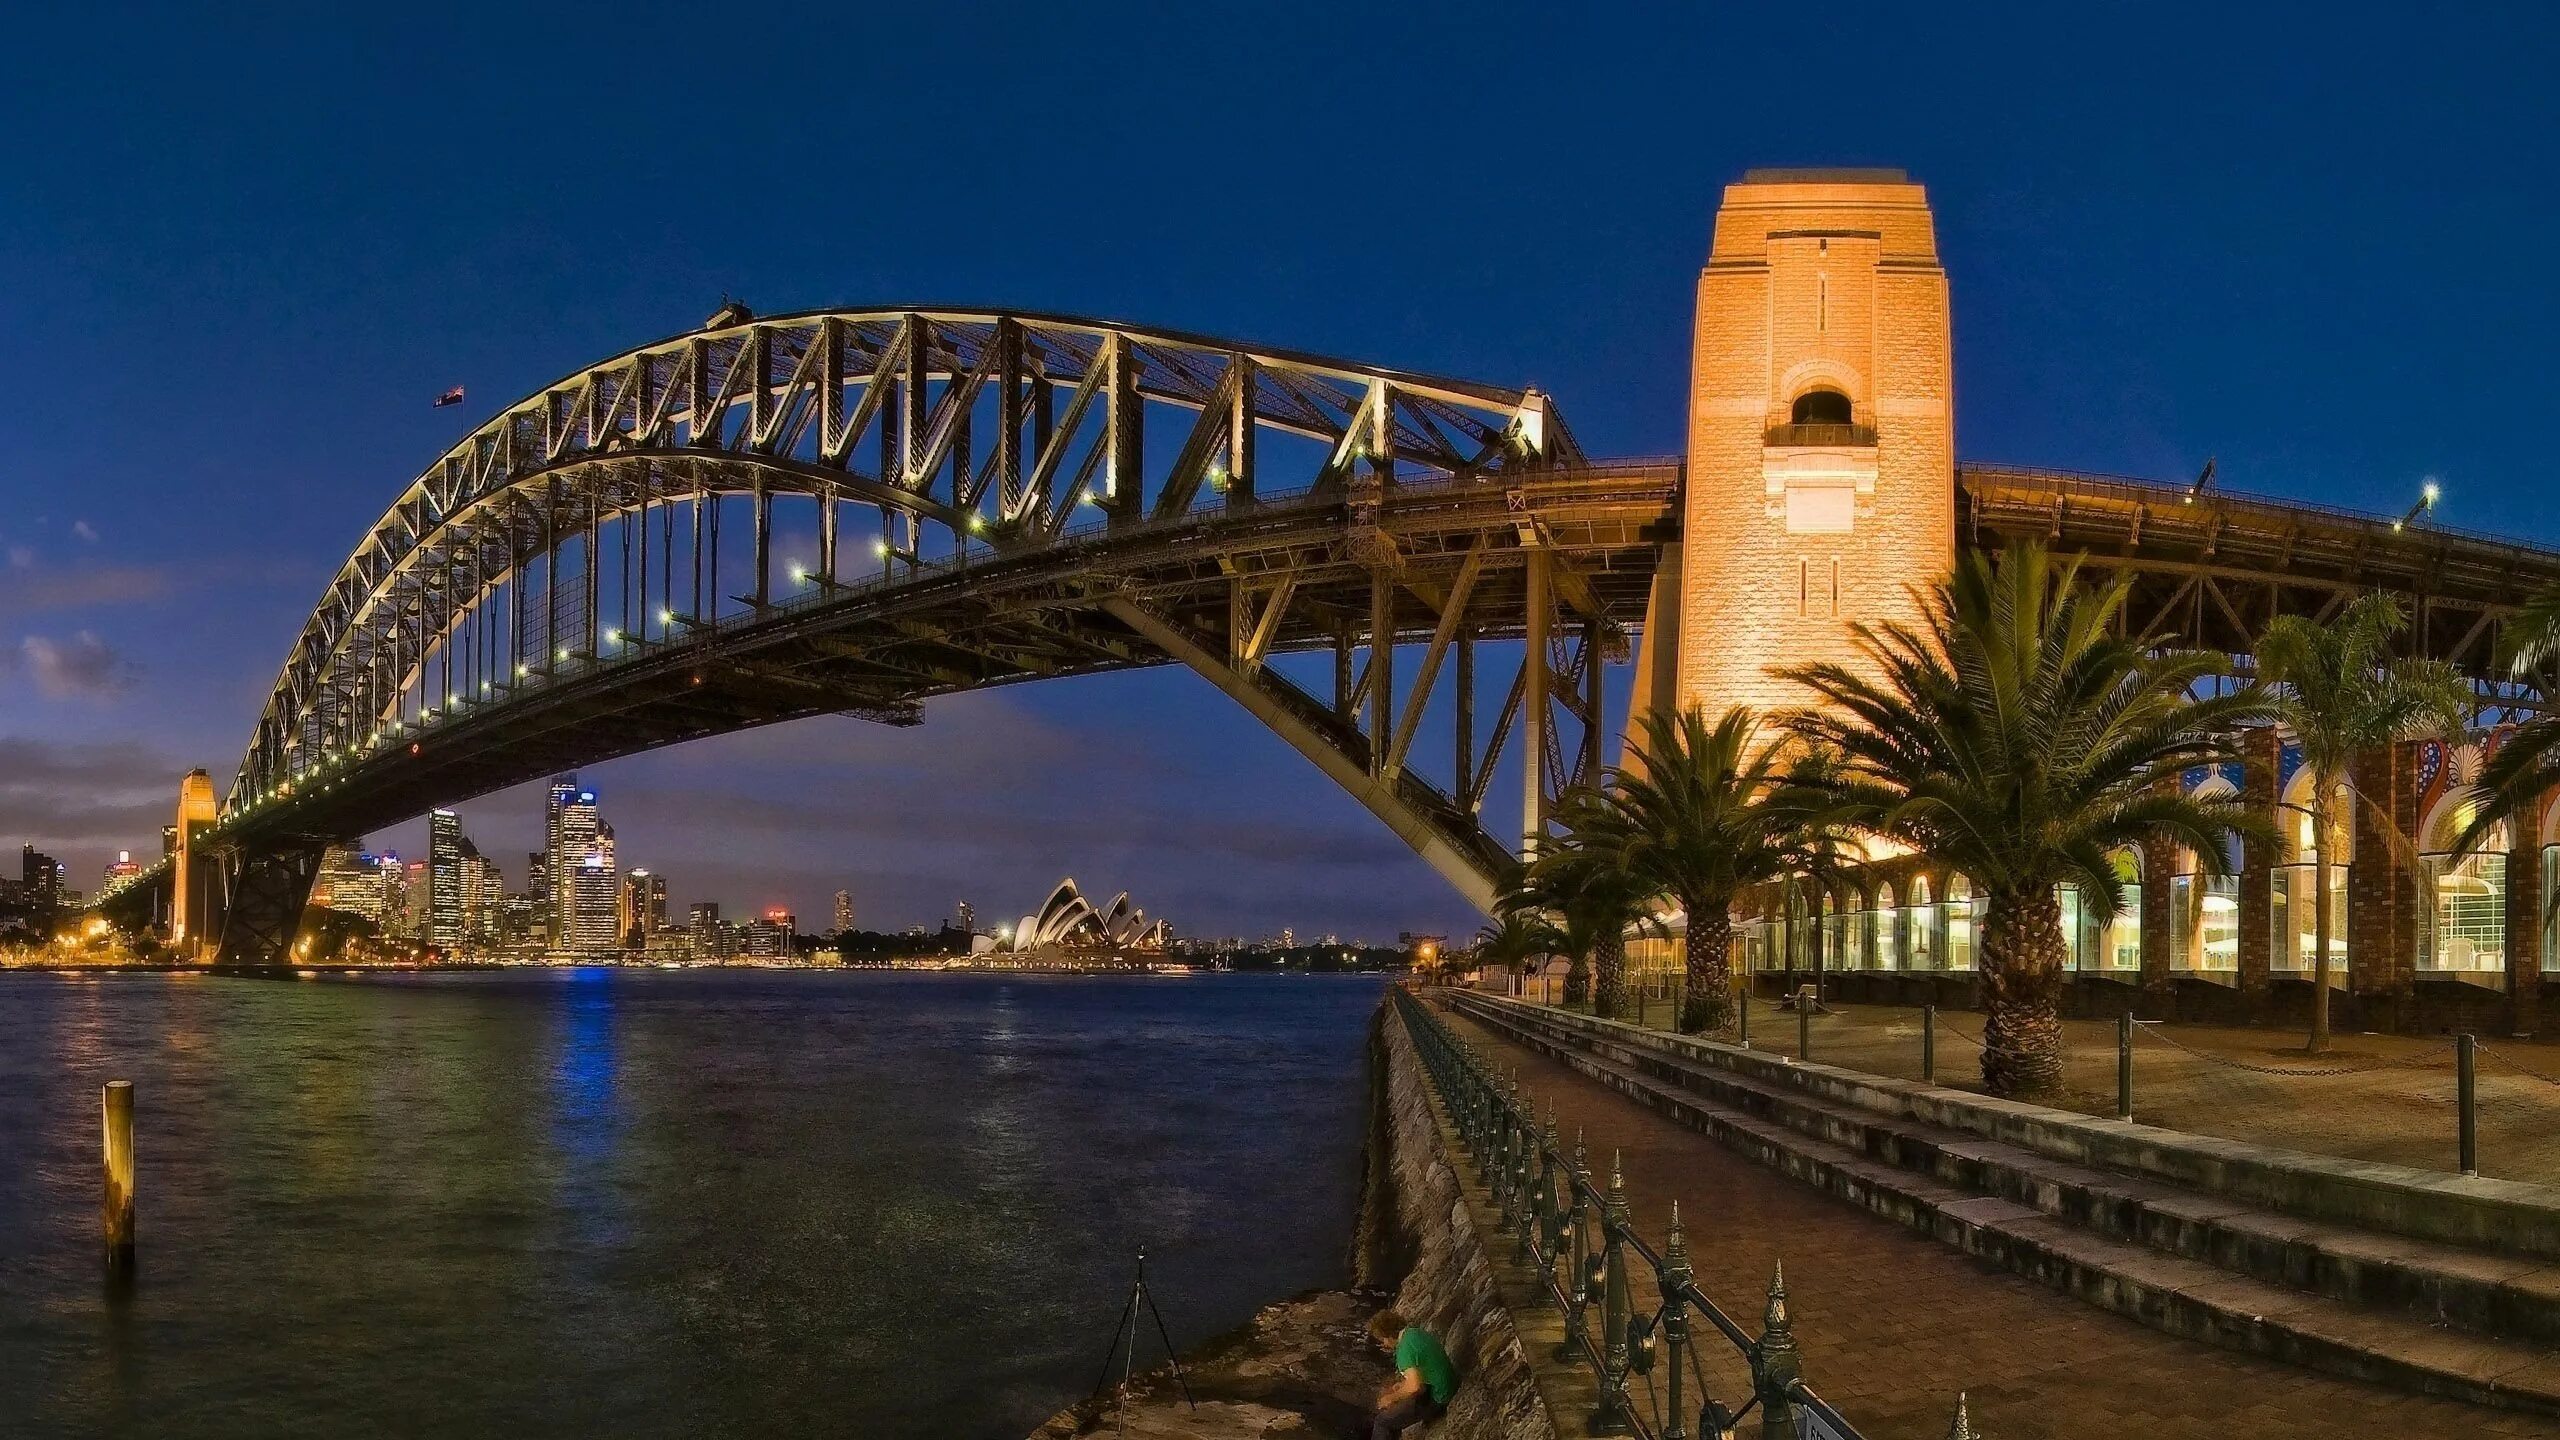 Message bridge. Харбор-бридж Австралия. Харбор-бридж Сидней. Австралия.Сидней.мост Харбор-бридж. Мост Харбор бридж.